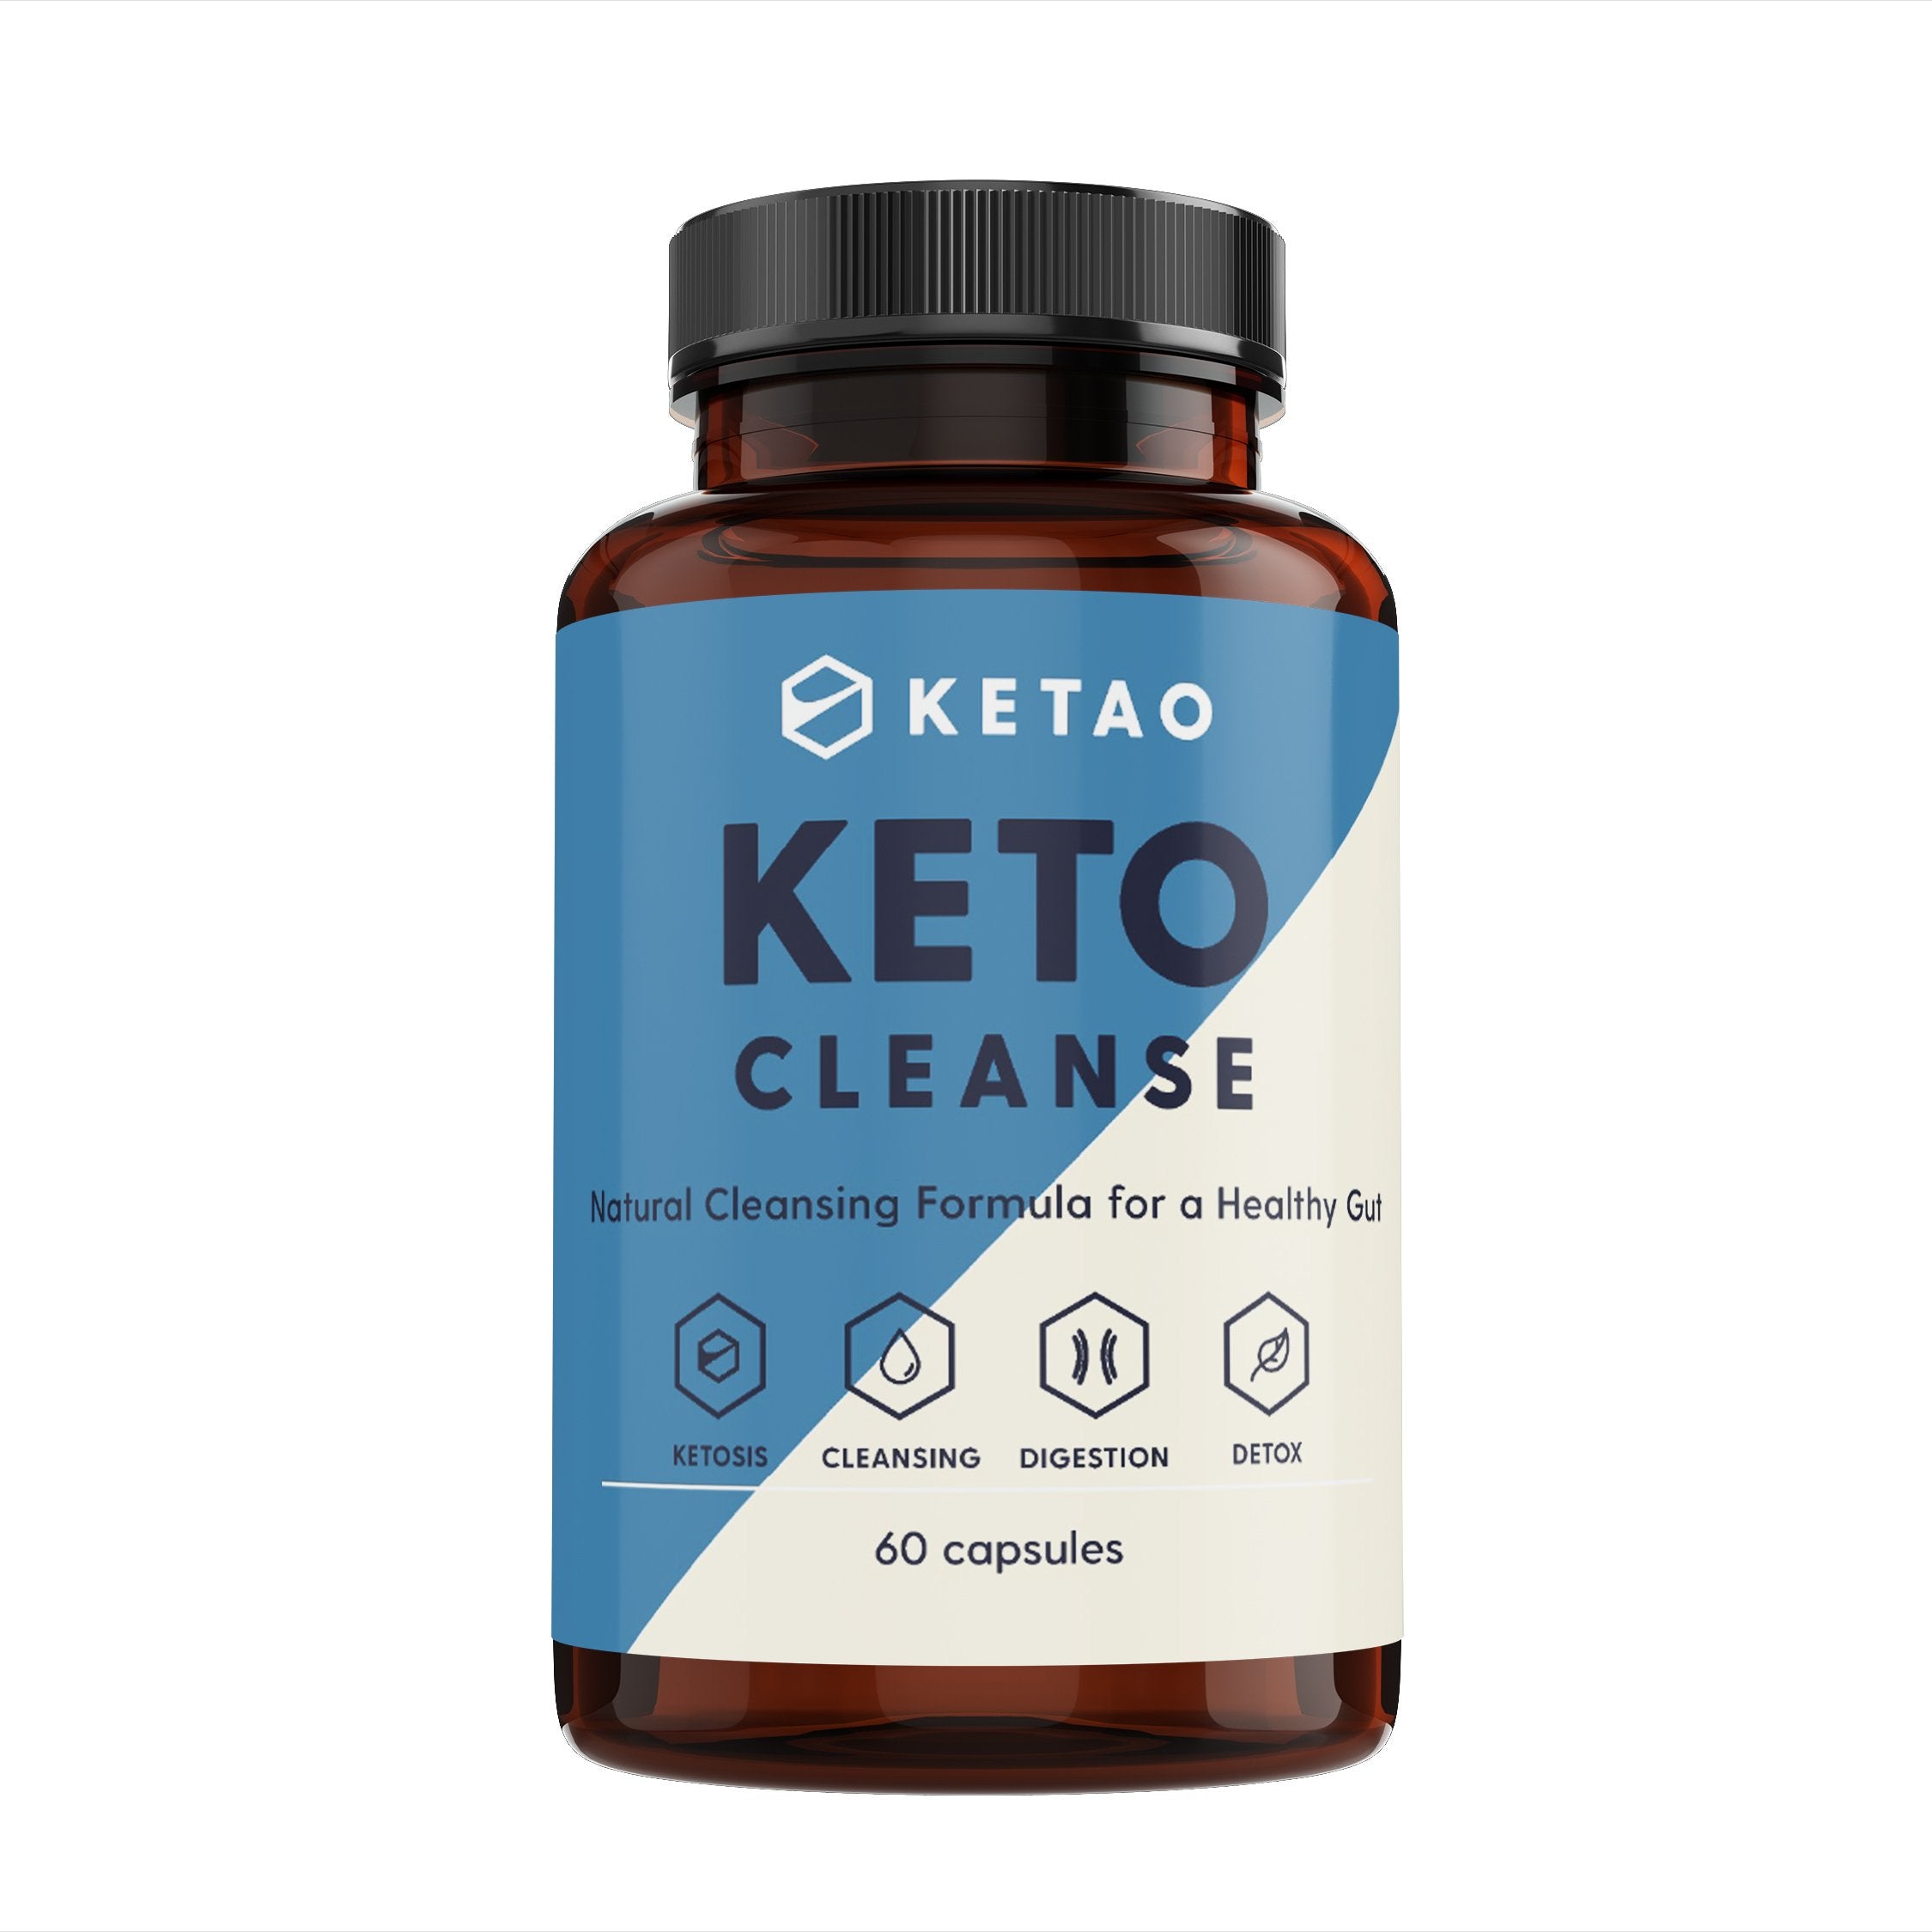 keto cleanse by keto 60 capsules